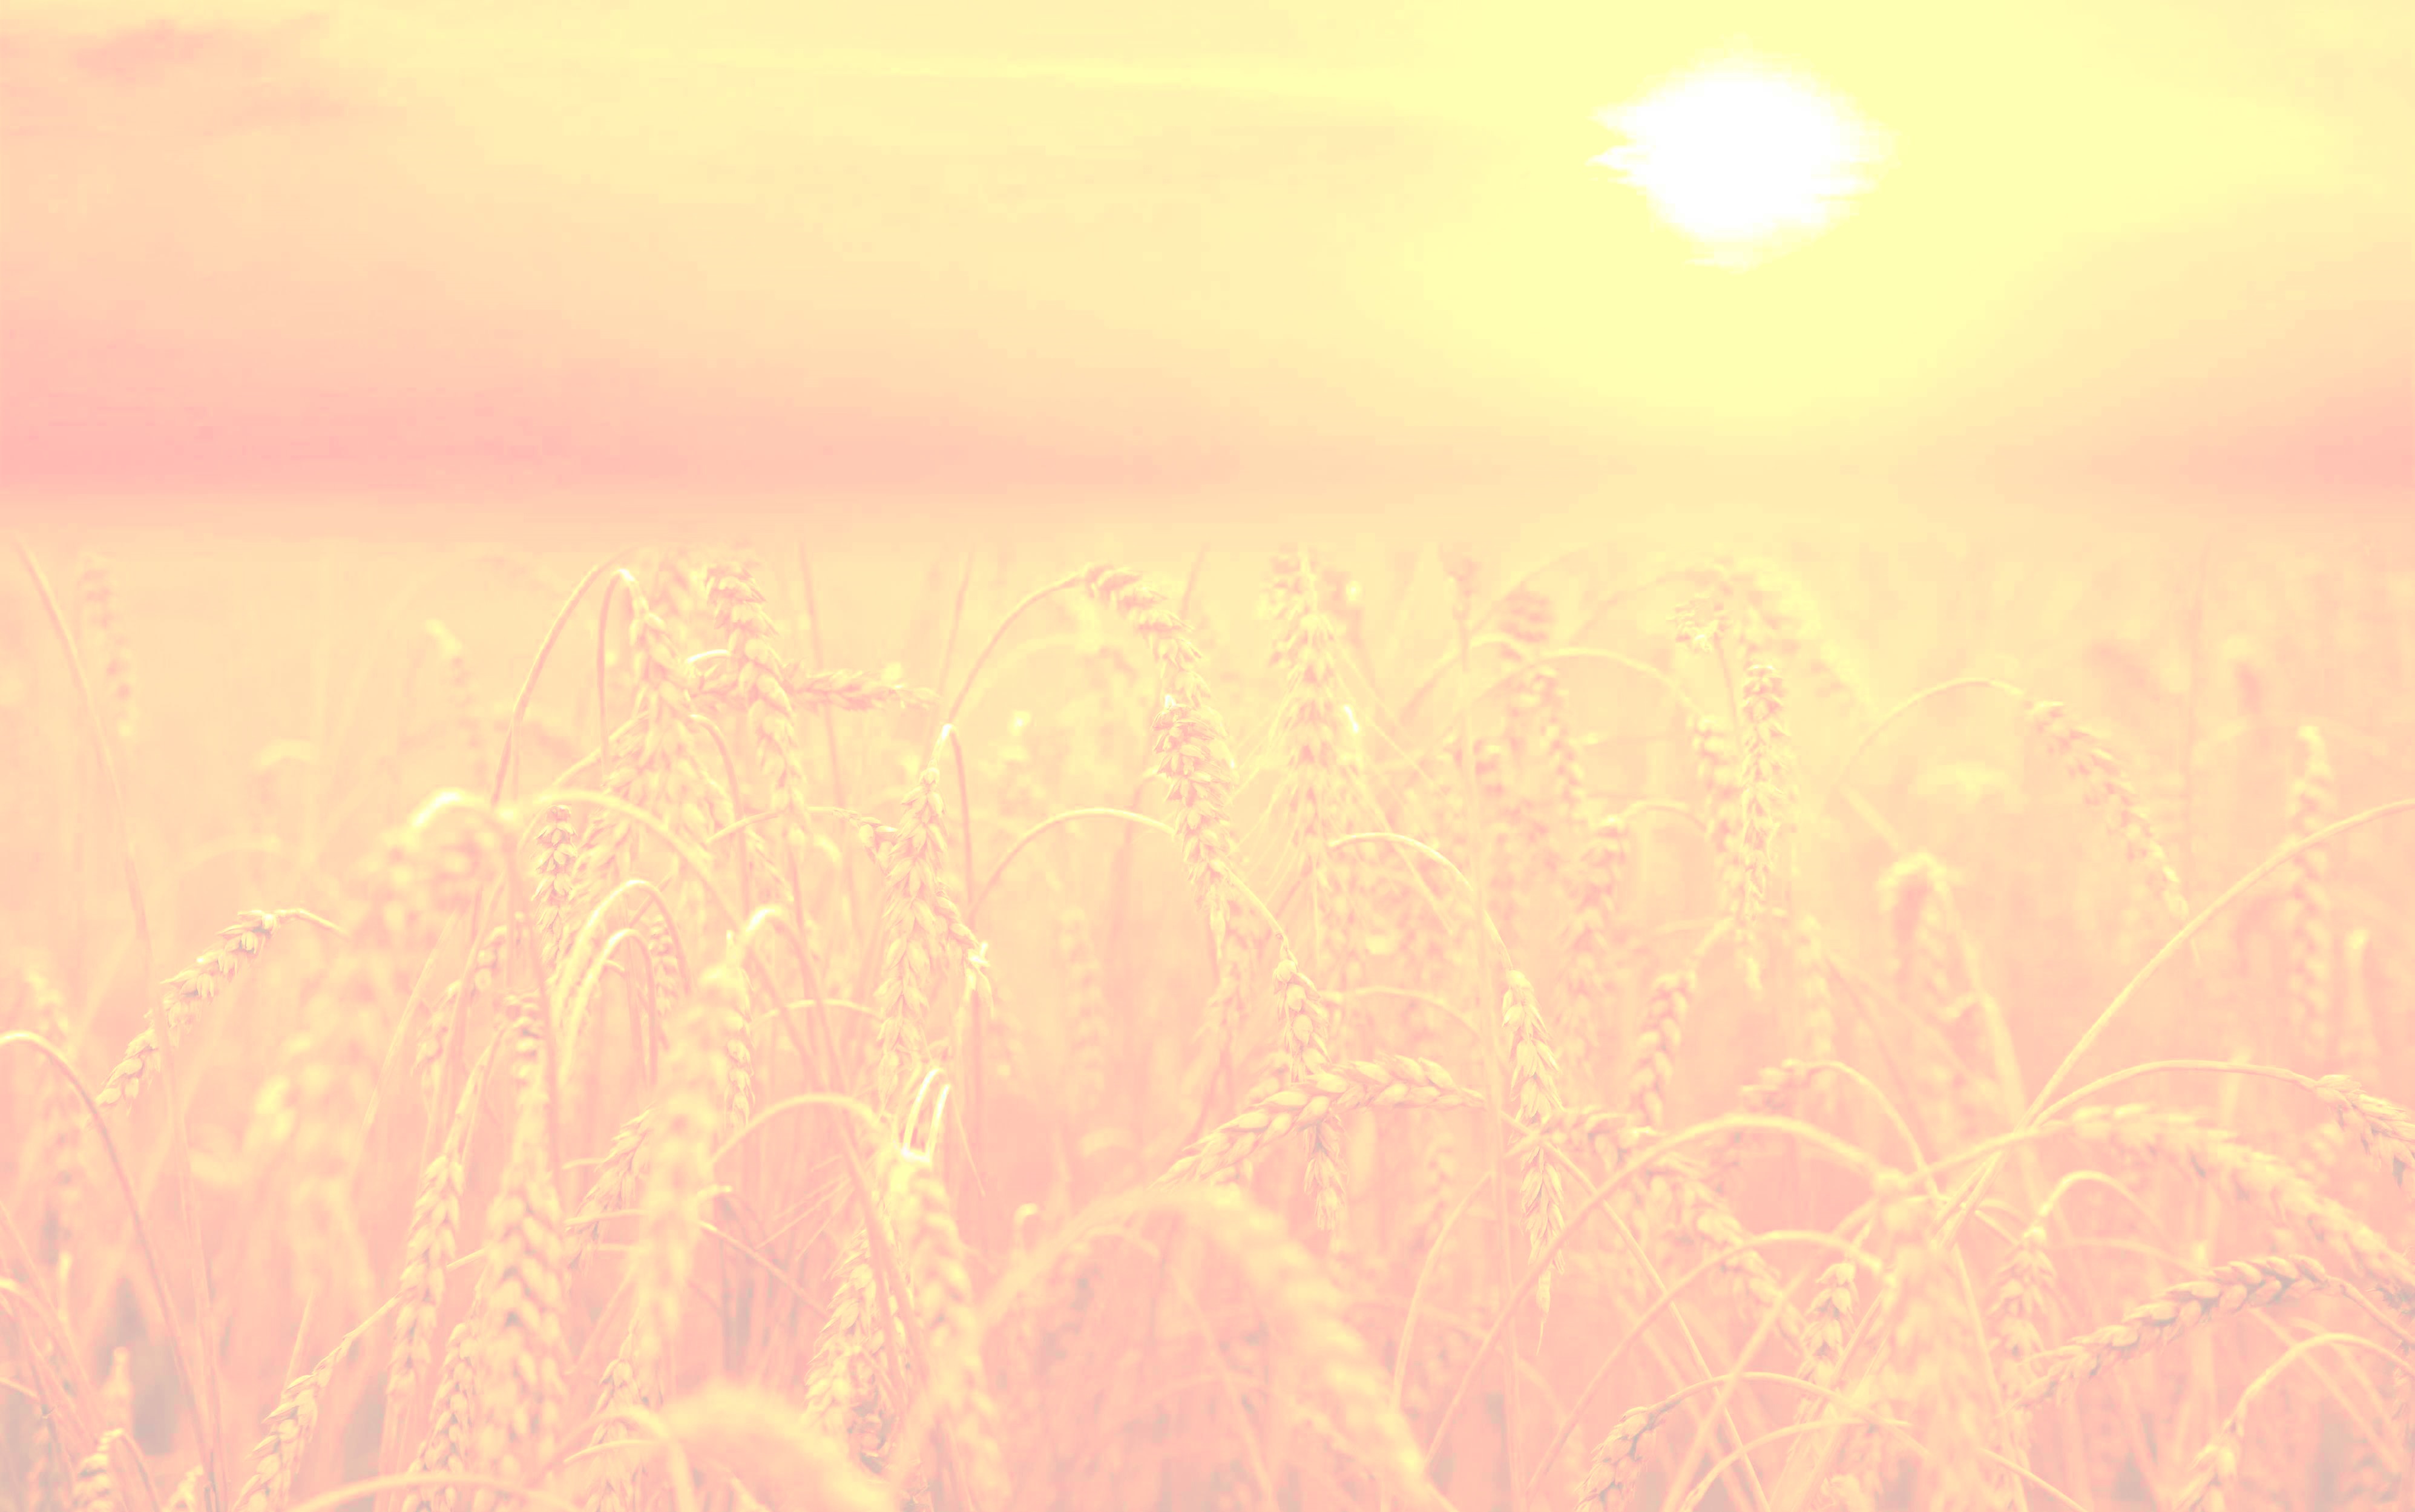 backdrop of ripening ears  yellow wheat field on  sunset